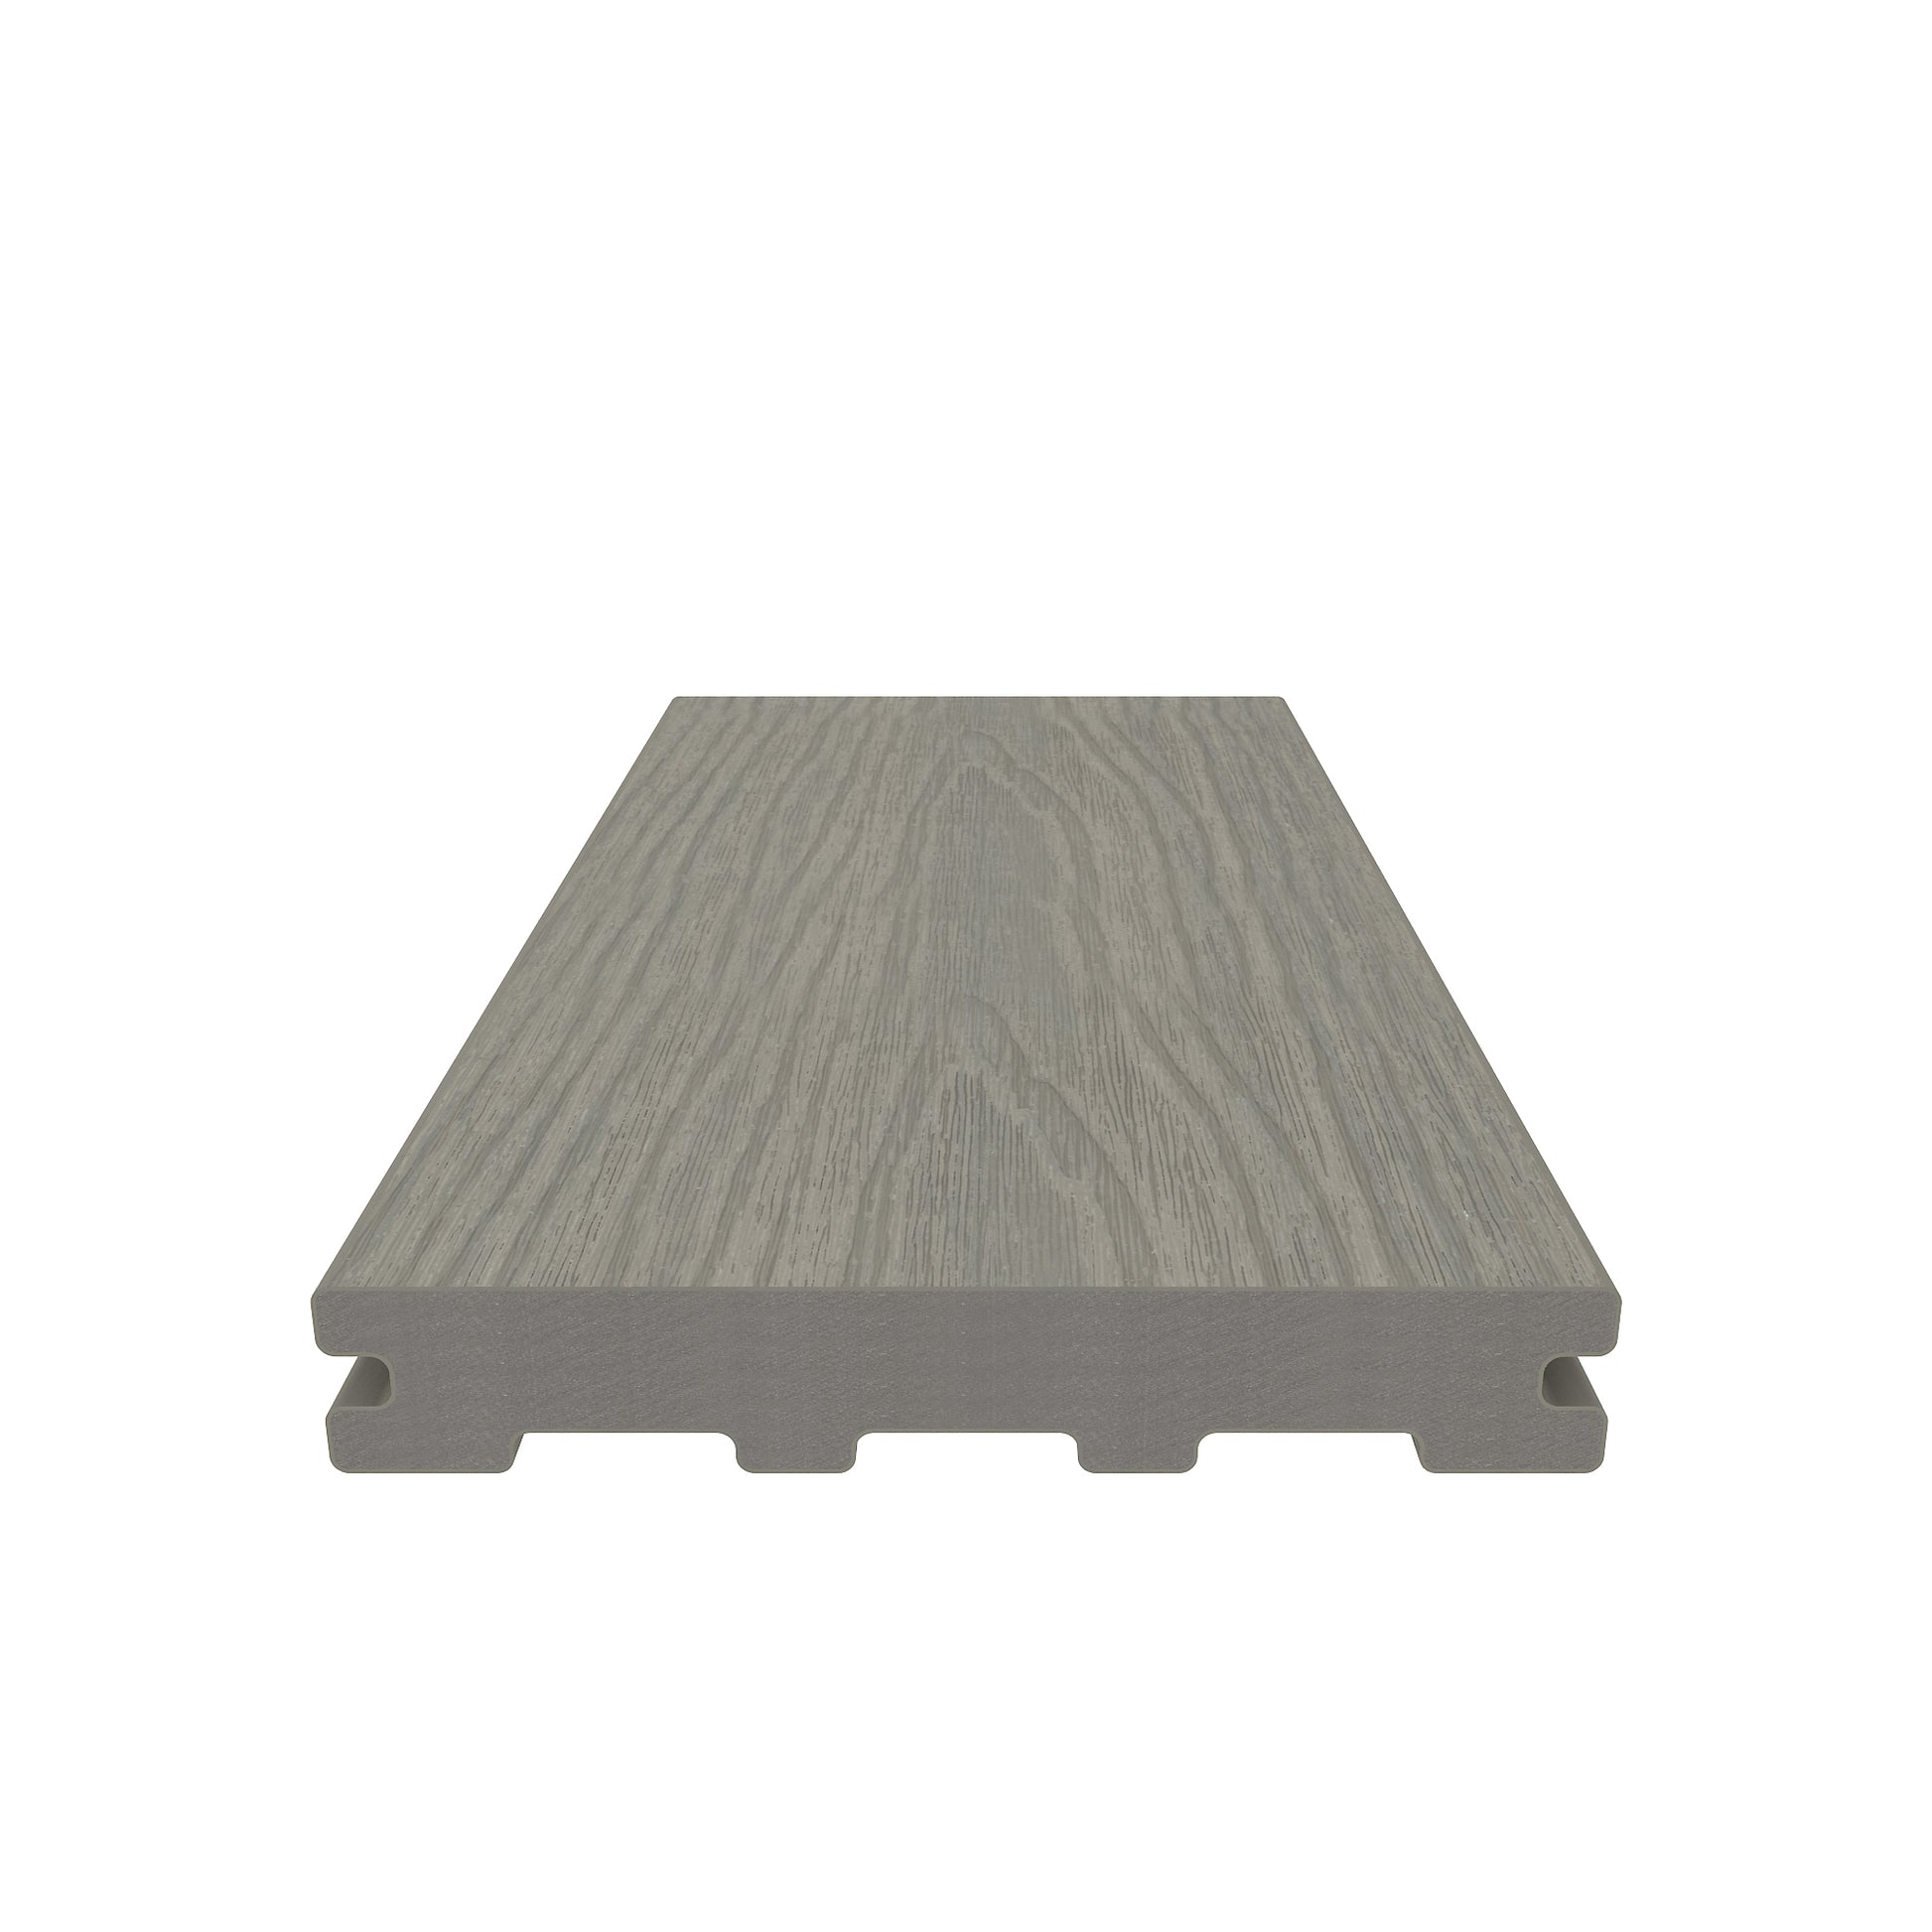 Ultrashield Naturale Capped Composite Deck Board Antique Grey